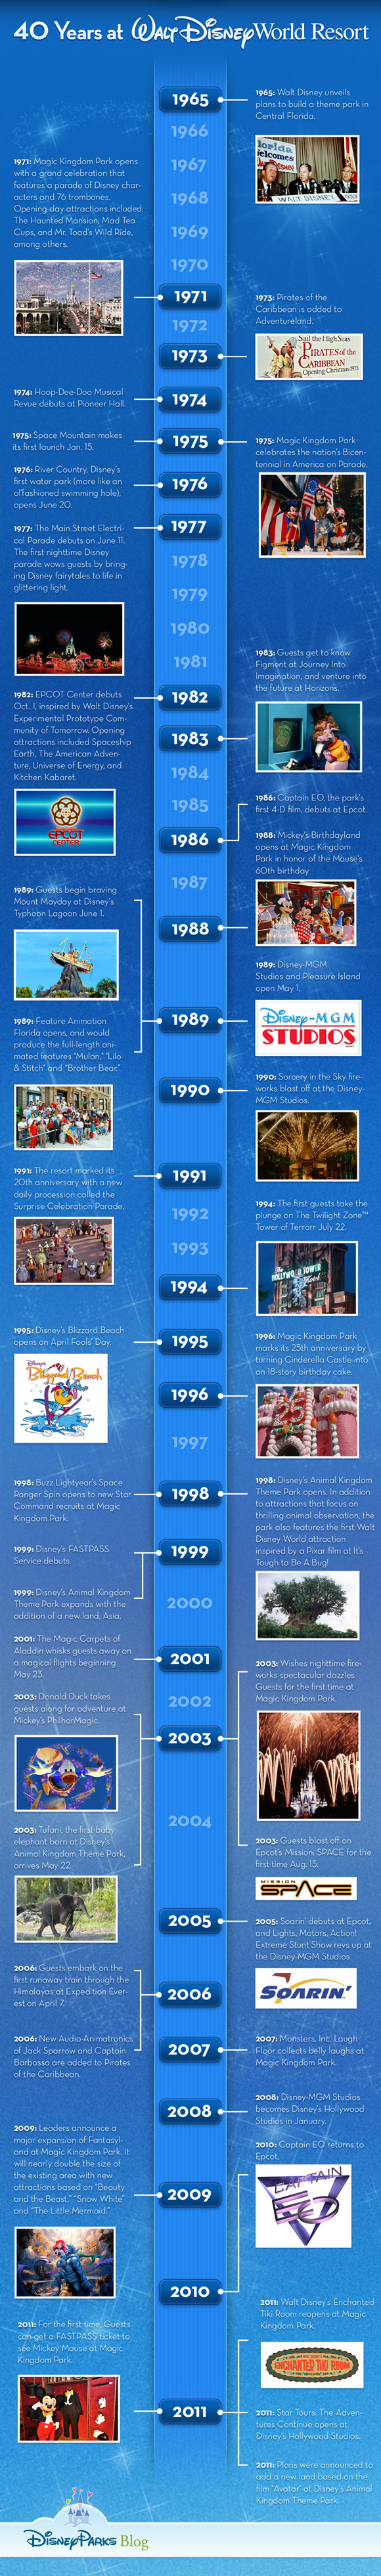 Timeline: Celebrating 40 Years at Walt Disney World